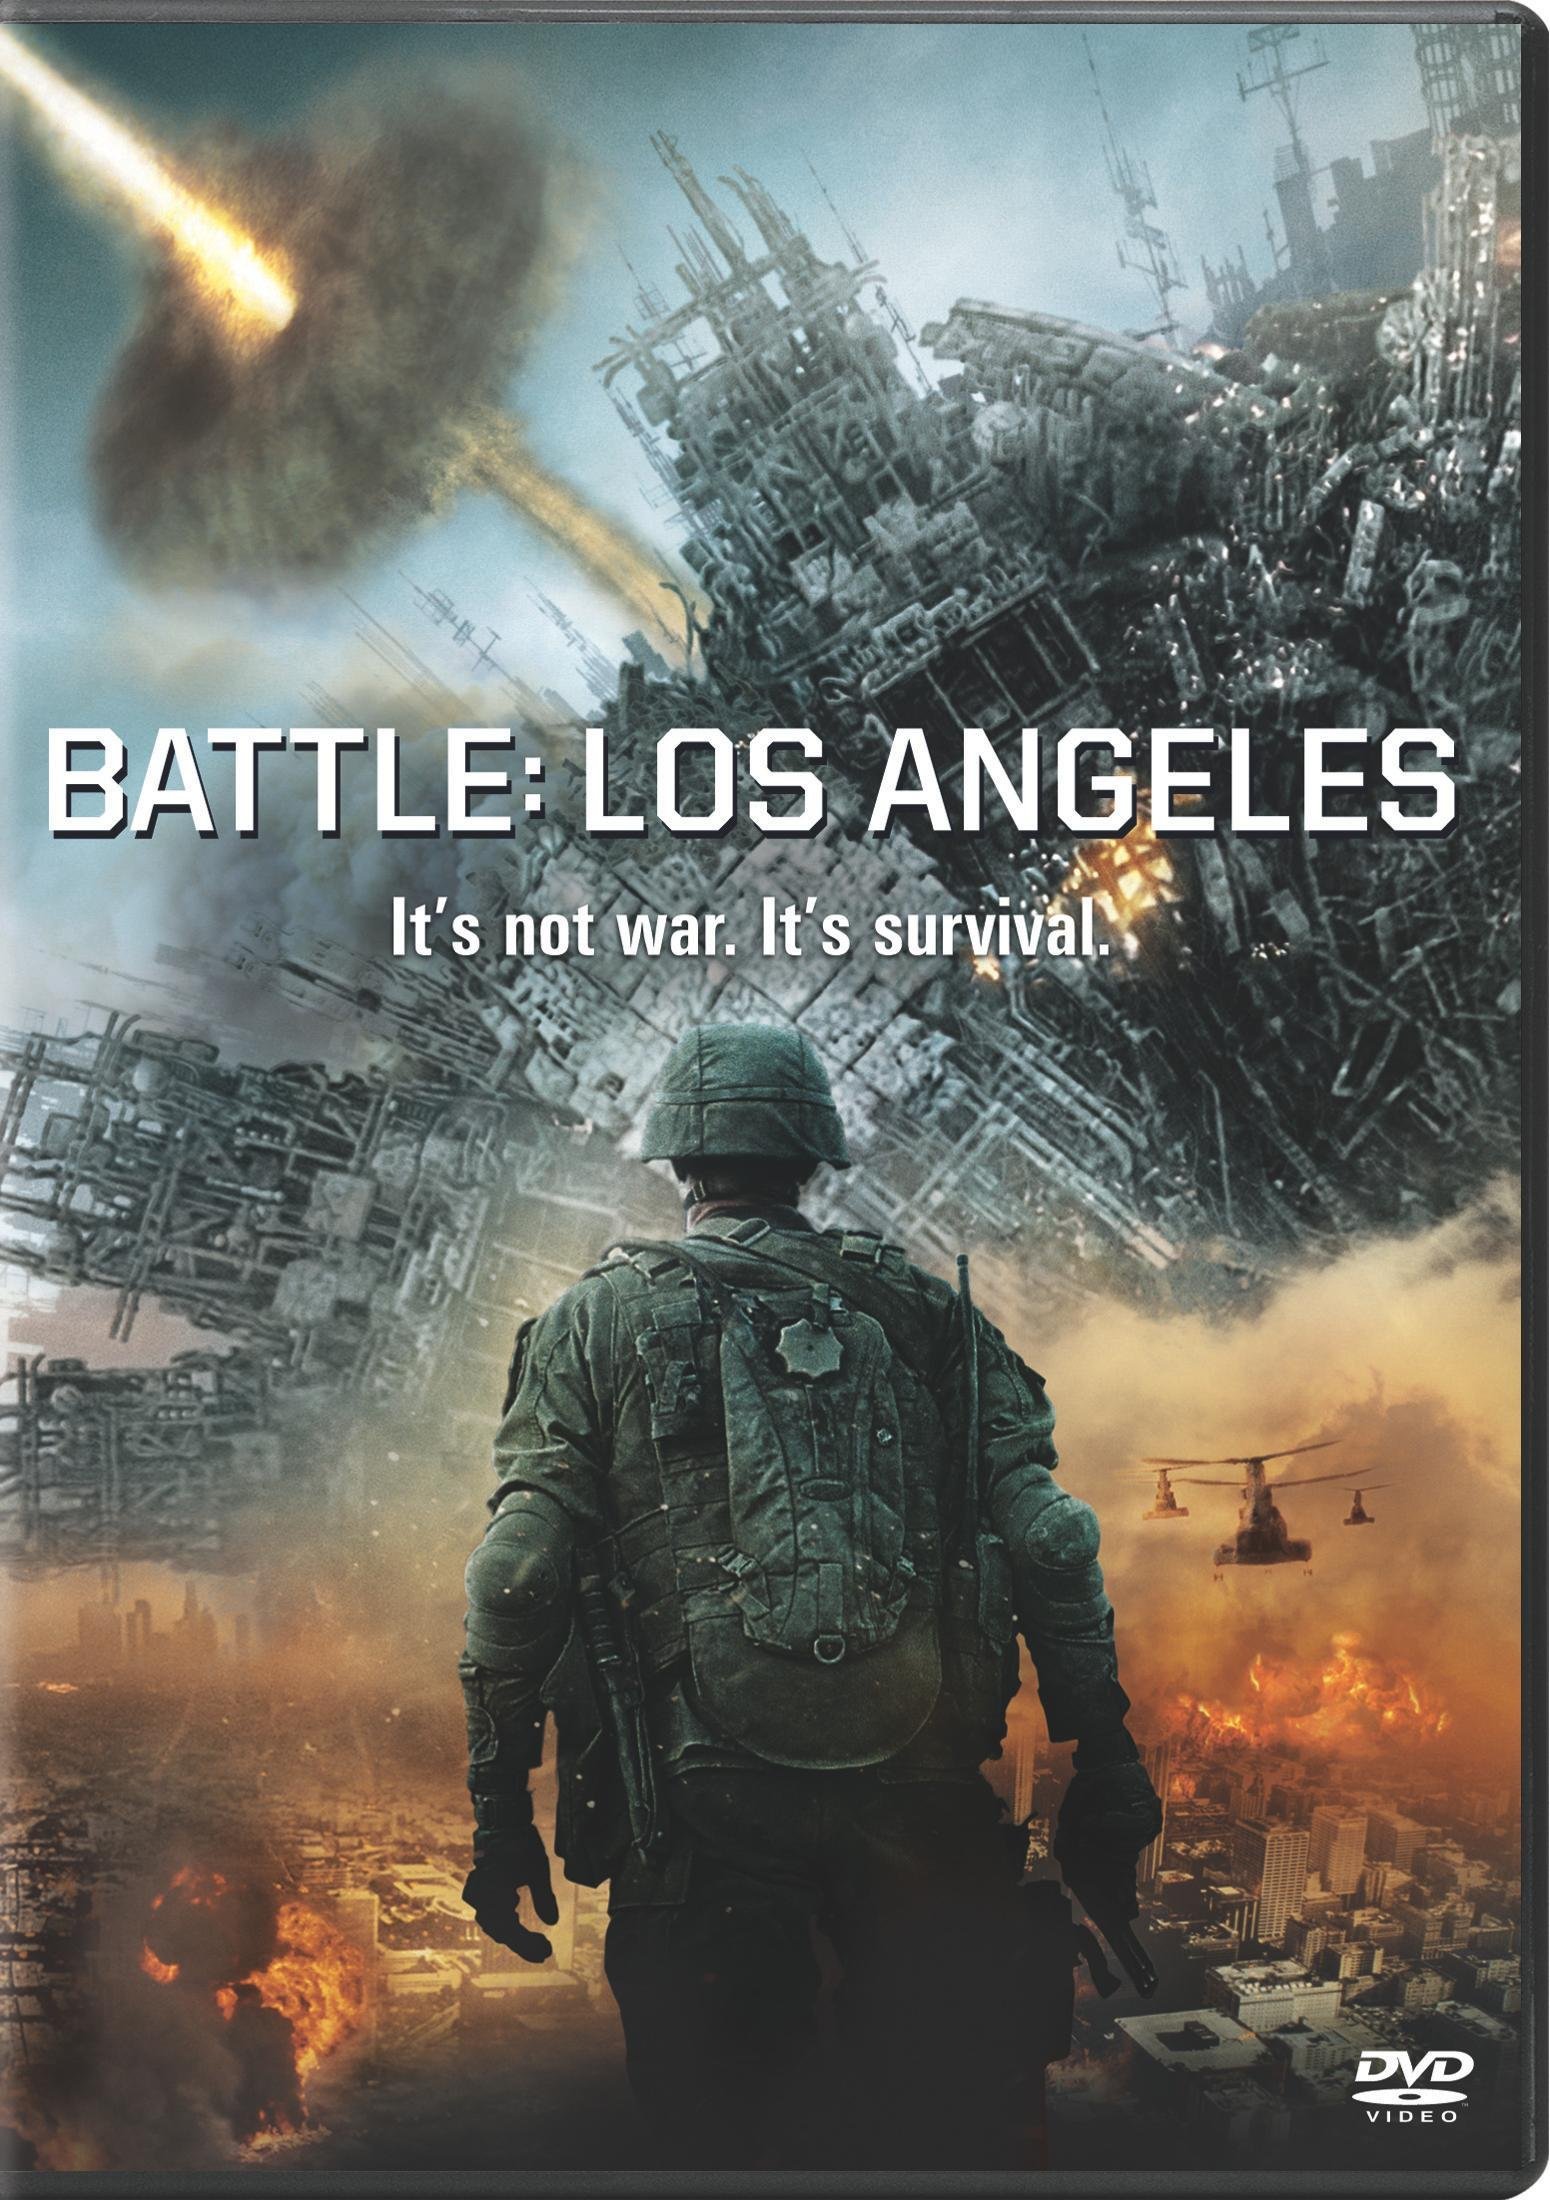 2011 Battle: Los Angeles